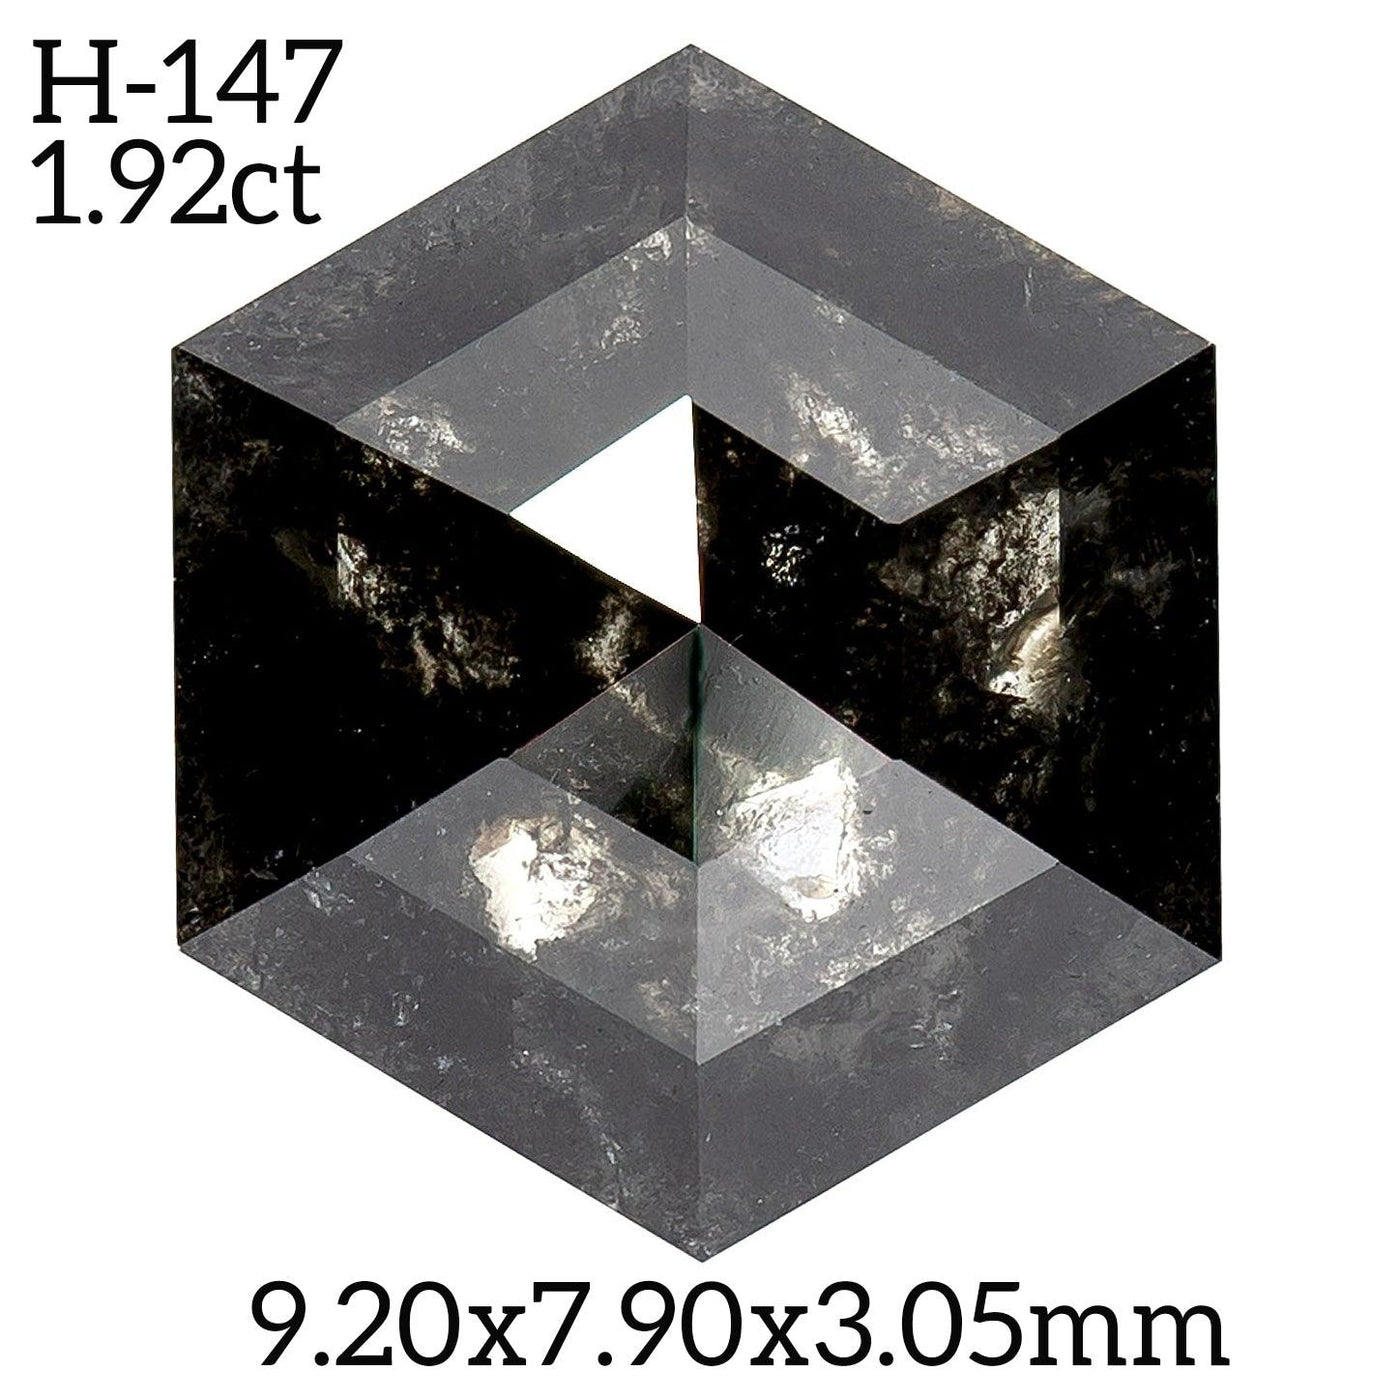 H147 - Salt and pepper hexagon diamond - Rubysta